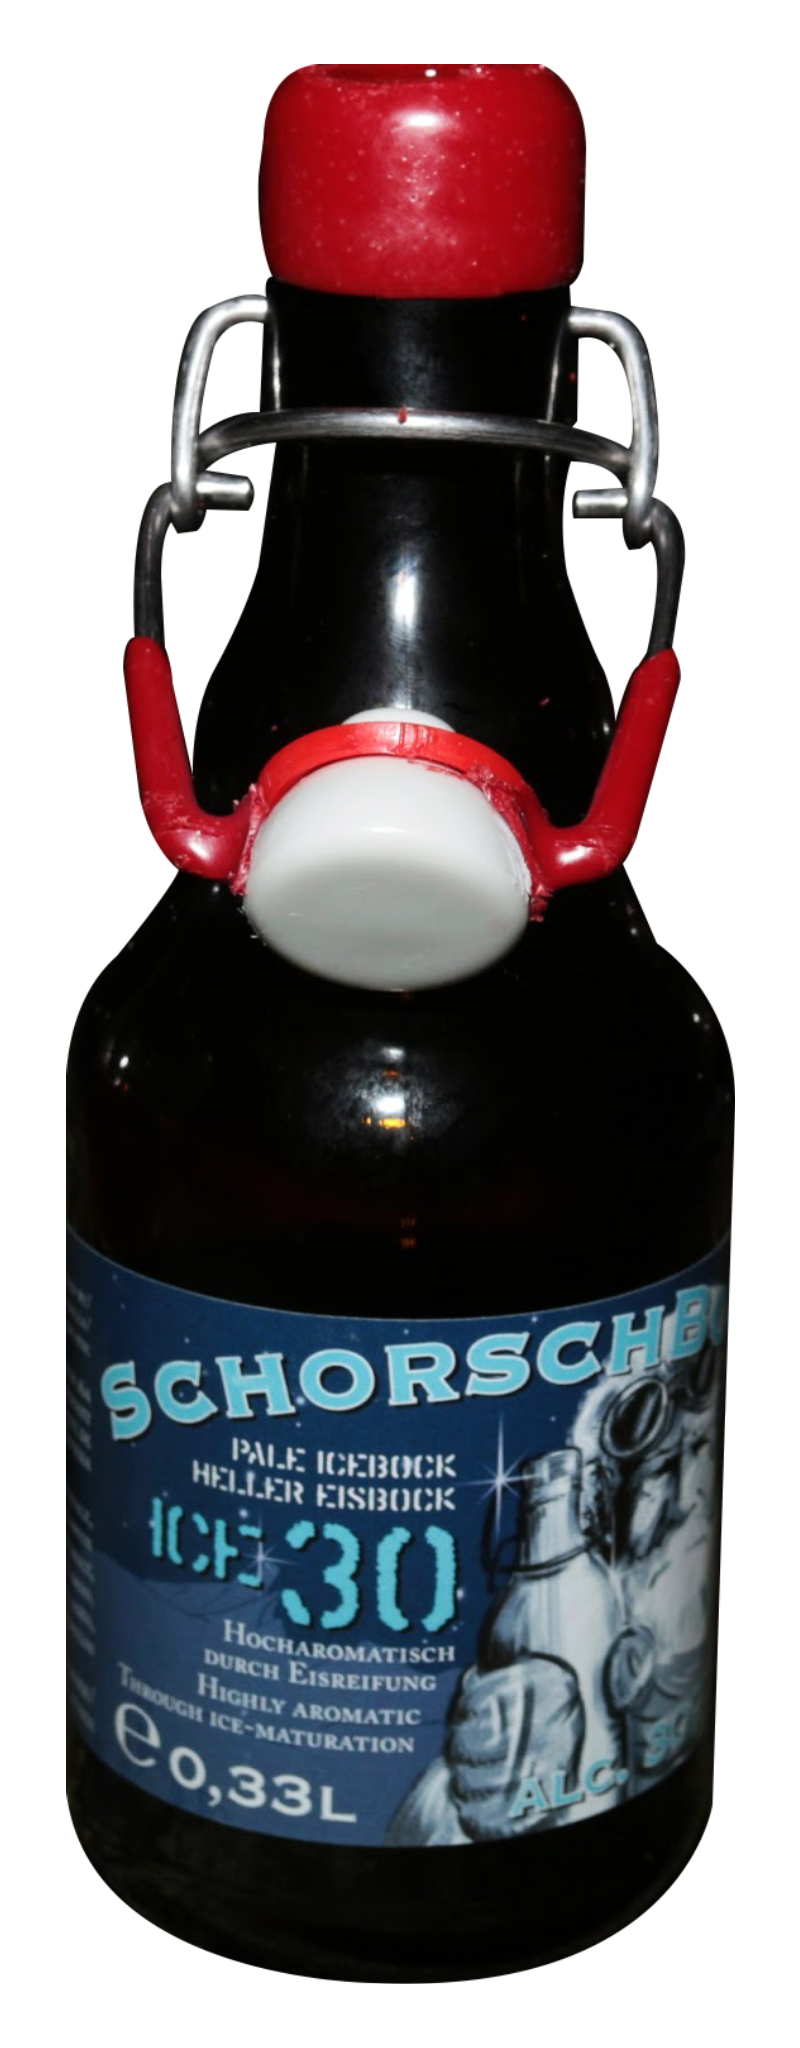 Schorsch Bock 30 (12 chai/thùng)  - 330ml